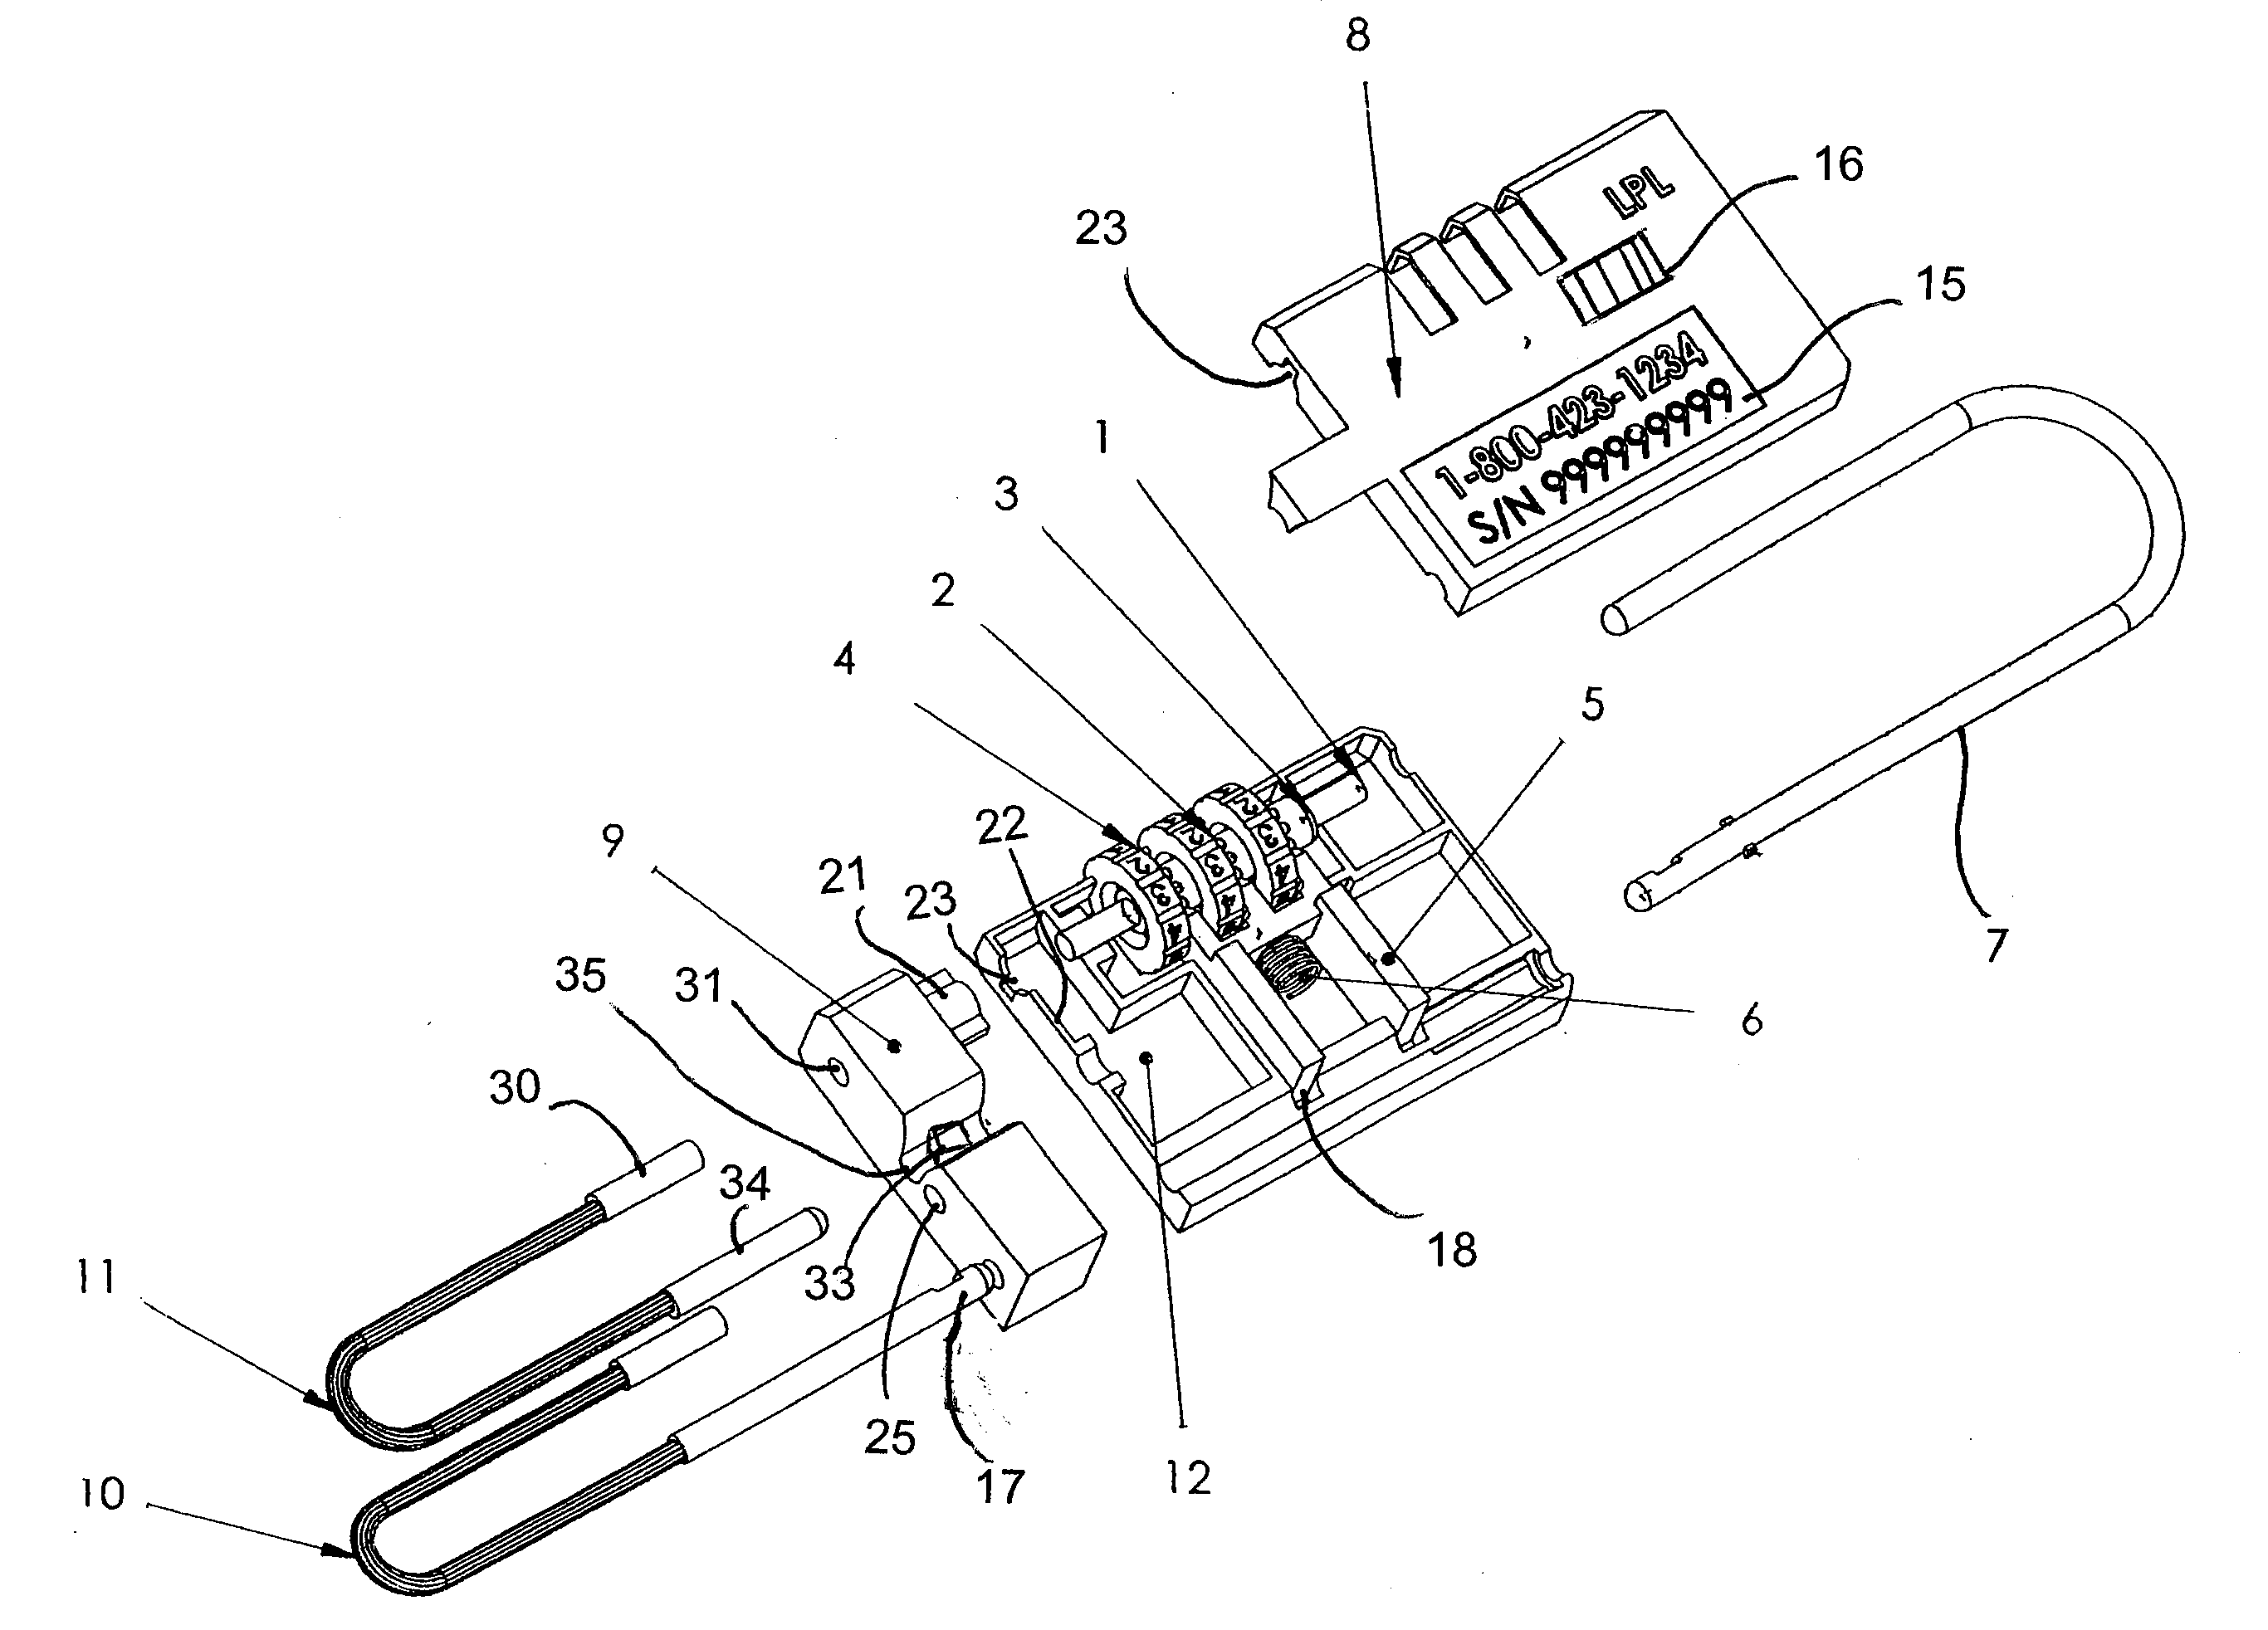 Multi-Shackle Lock and Method of Using the Multi-Shackle Lock